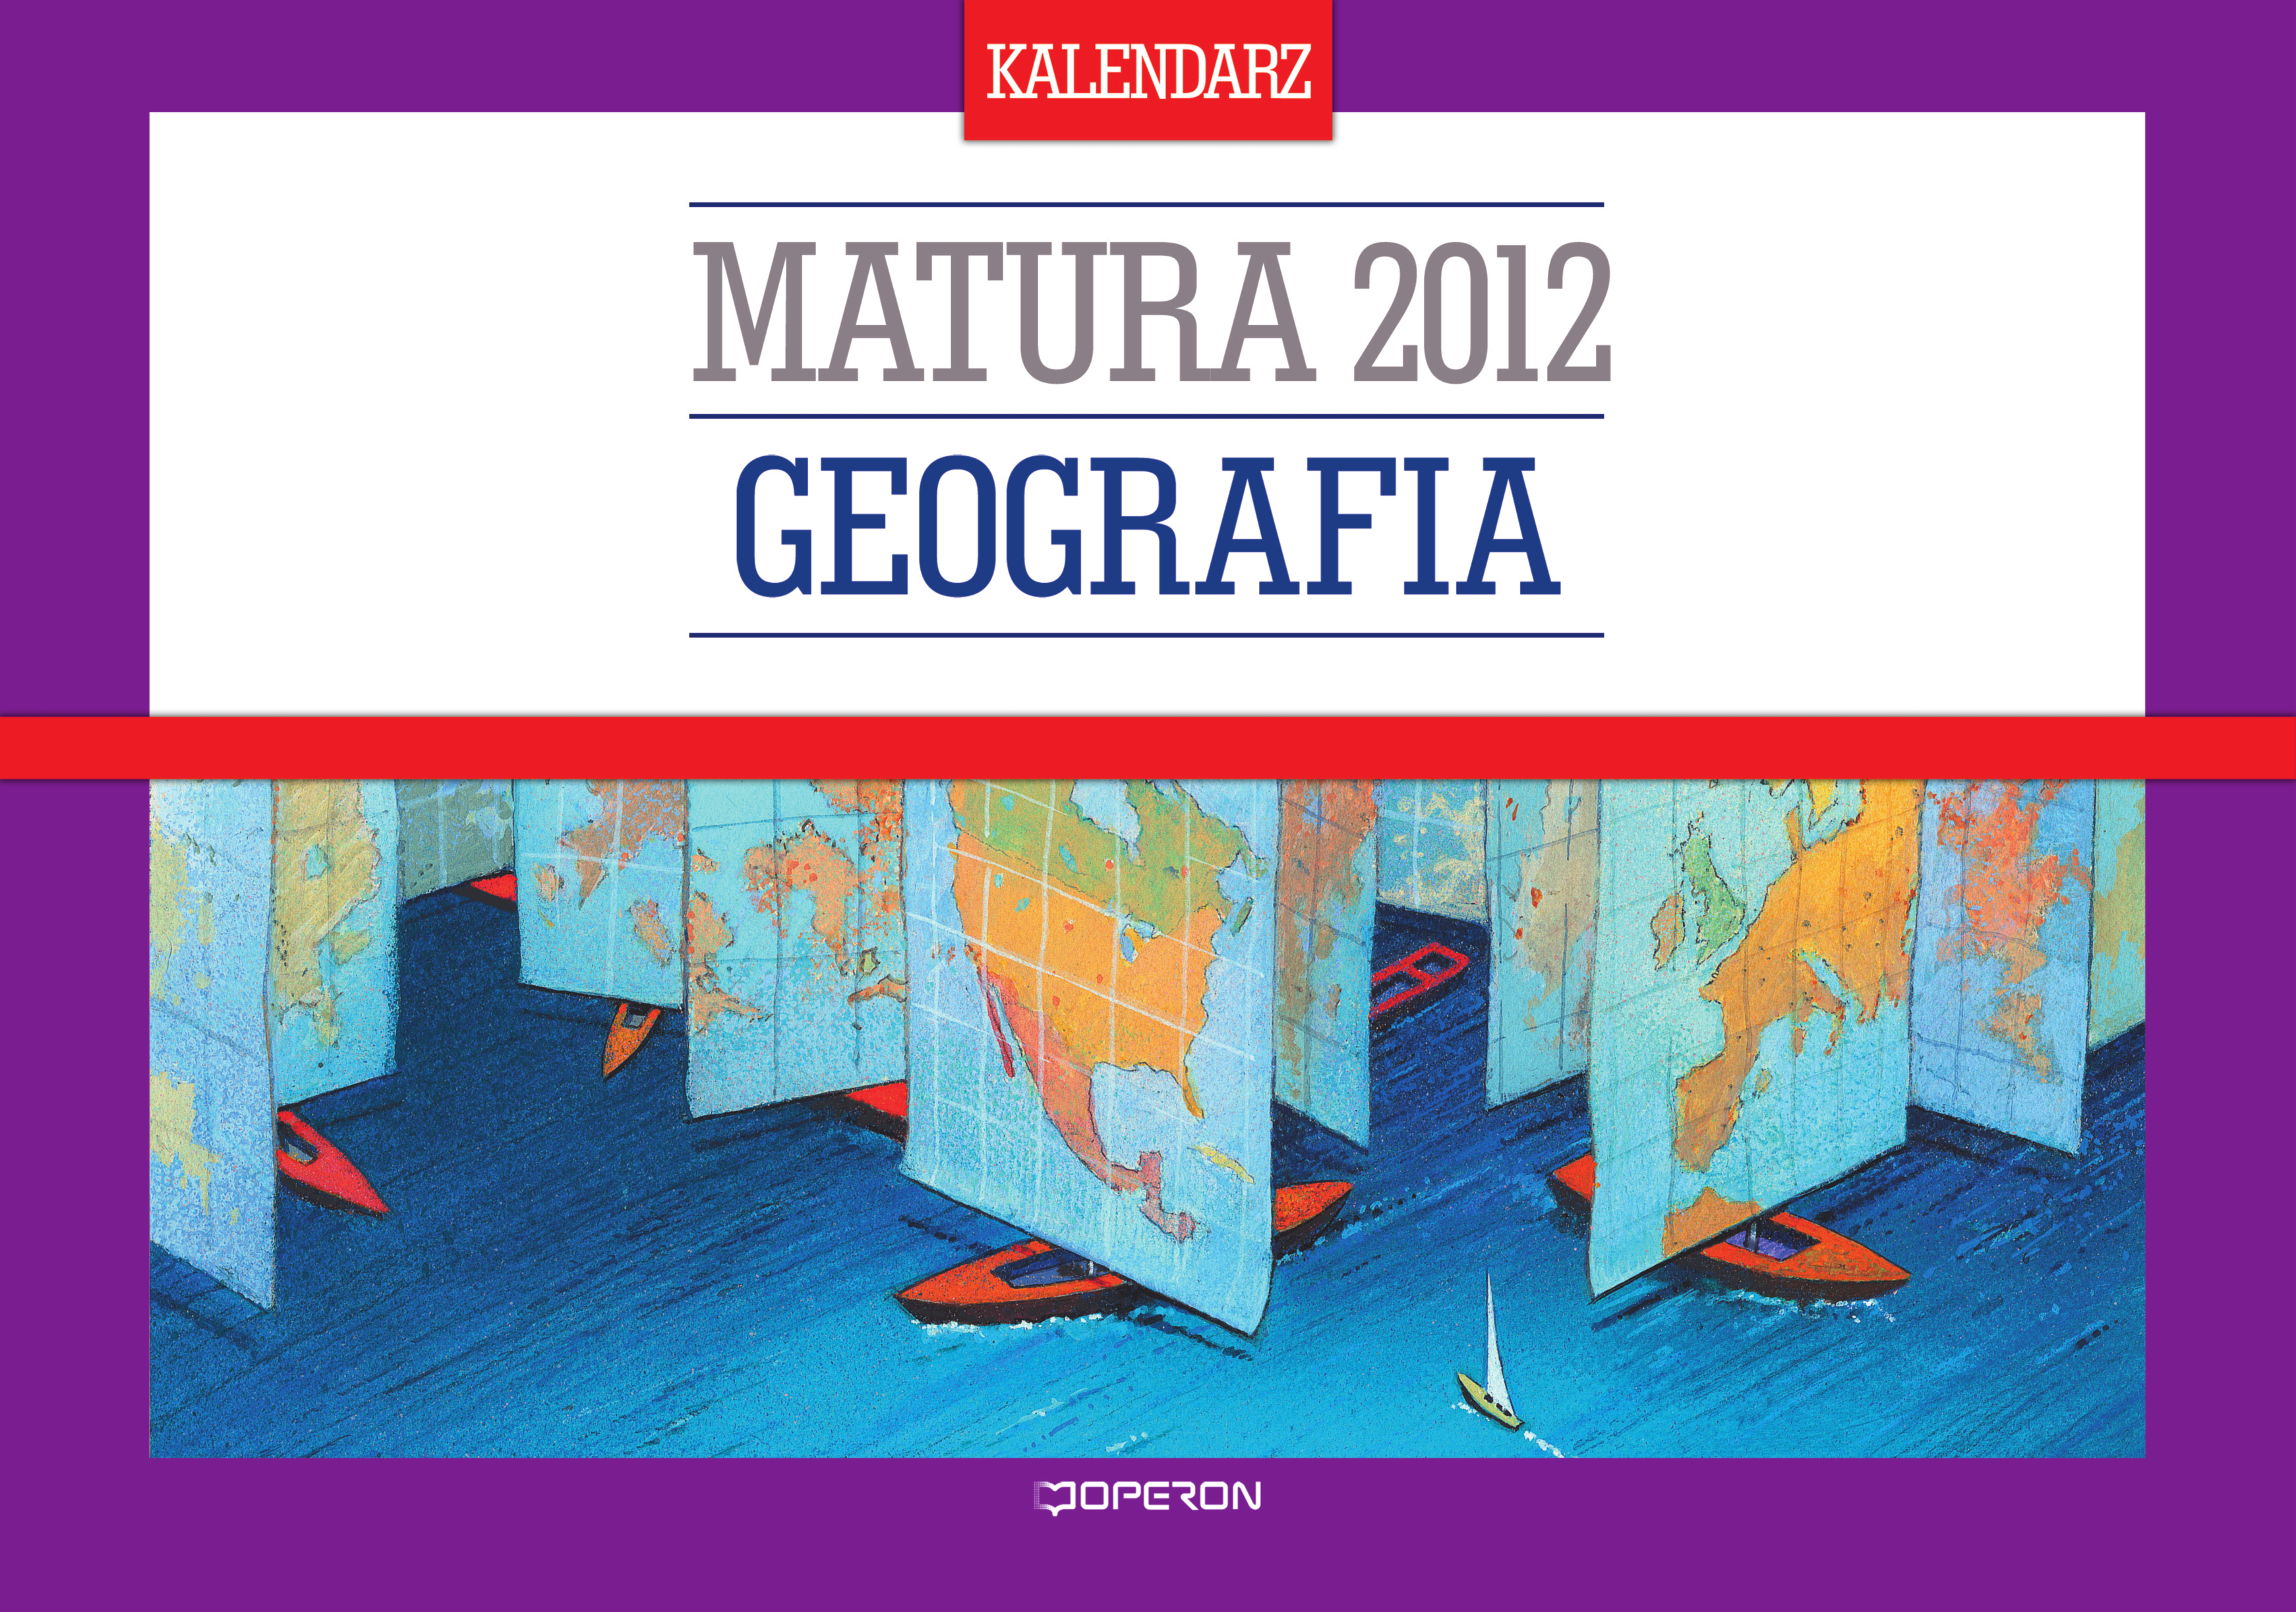 04_Geografia_kalendarz-okl 2012_01_04 LOGKal_cover 11-06-17 11:51 Strona 1